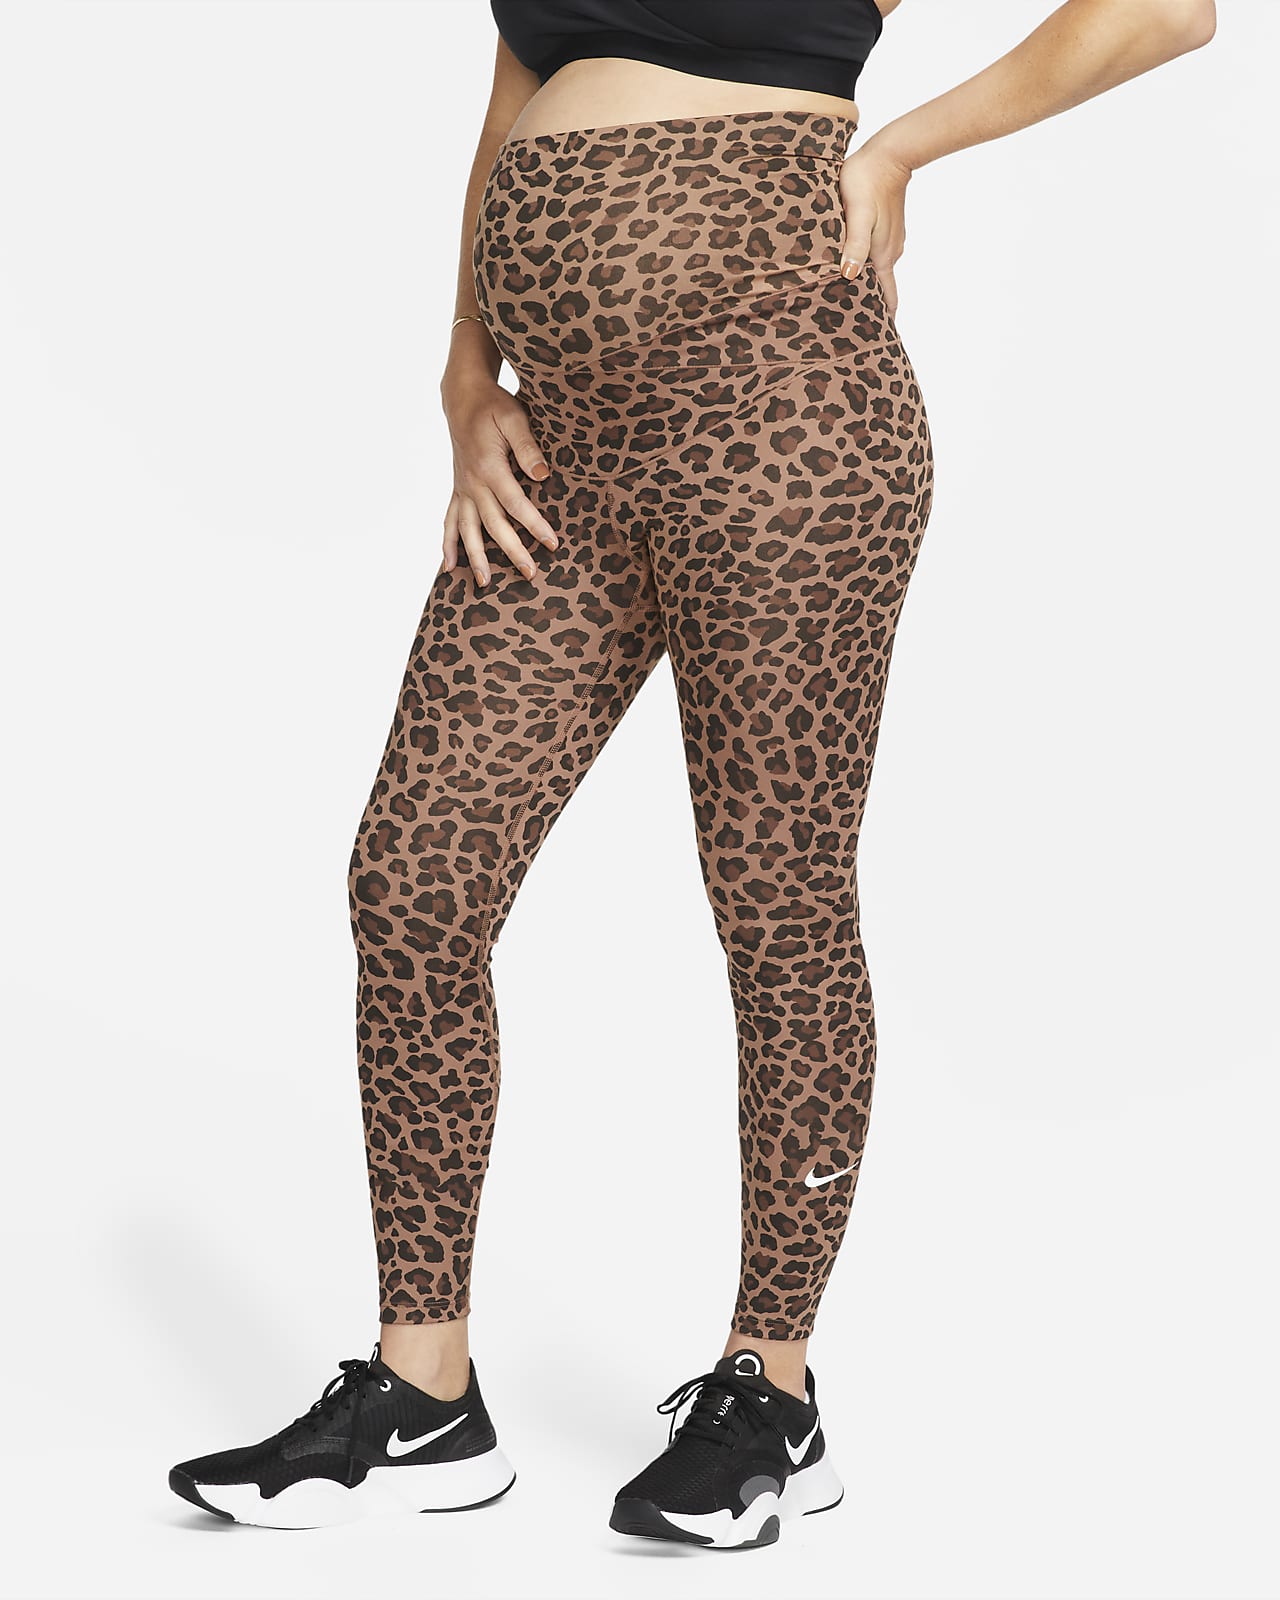 One (M) Women's High-Waisted Leopard Print Leggings Nike